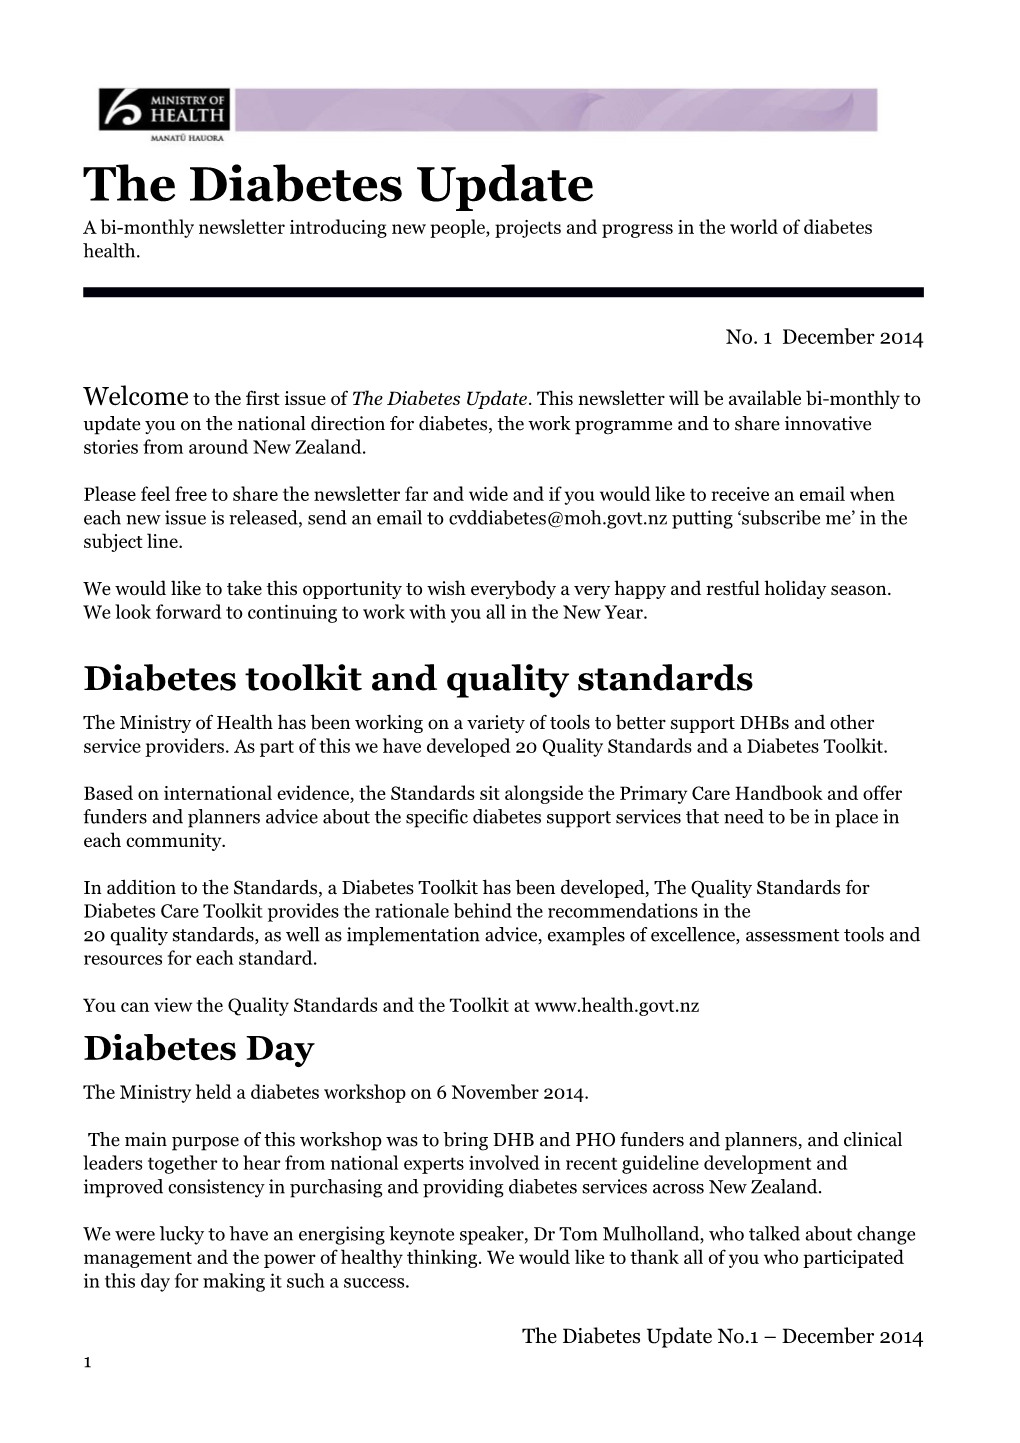 The Diabetes Update No.1 December 2014